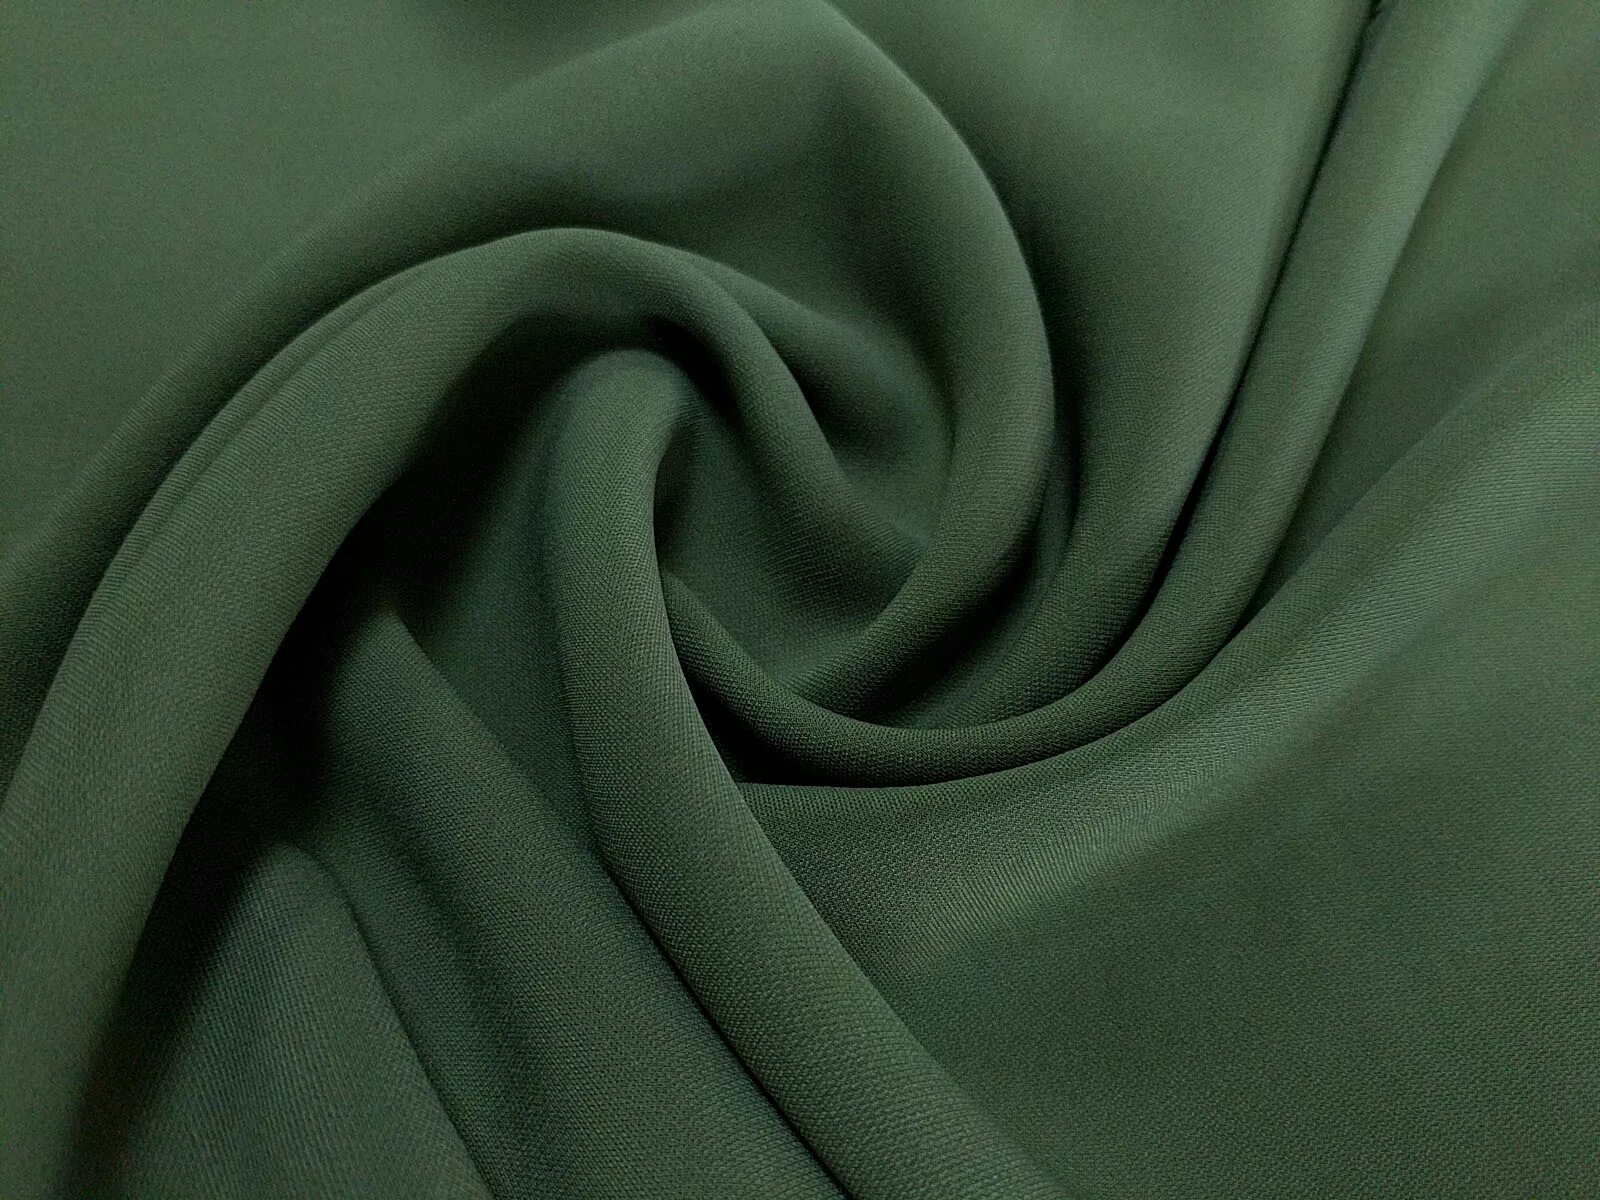 Цвети хаки. Ткань Ниагара зеленая. Цвет хаки #c4a64d. Ткань цвета хаки. Сукно цвета хаки.